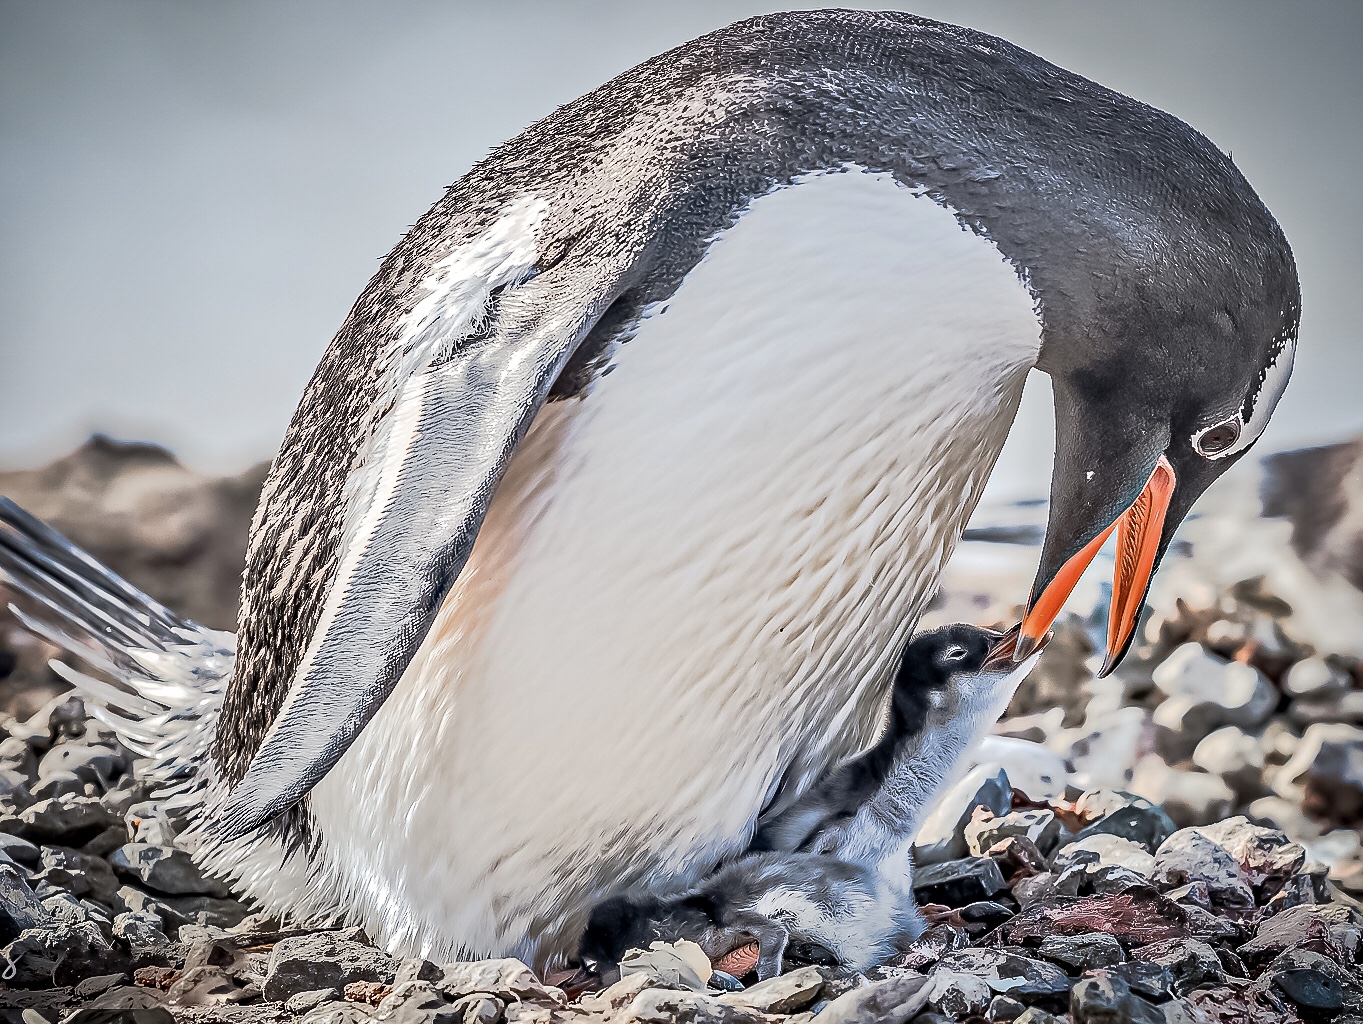 hk_c_溪邊-母與子-南極的企鵝媽媽悉心照顧新生寶寶.jpeg